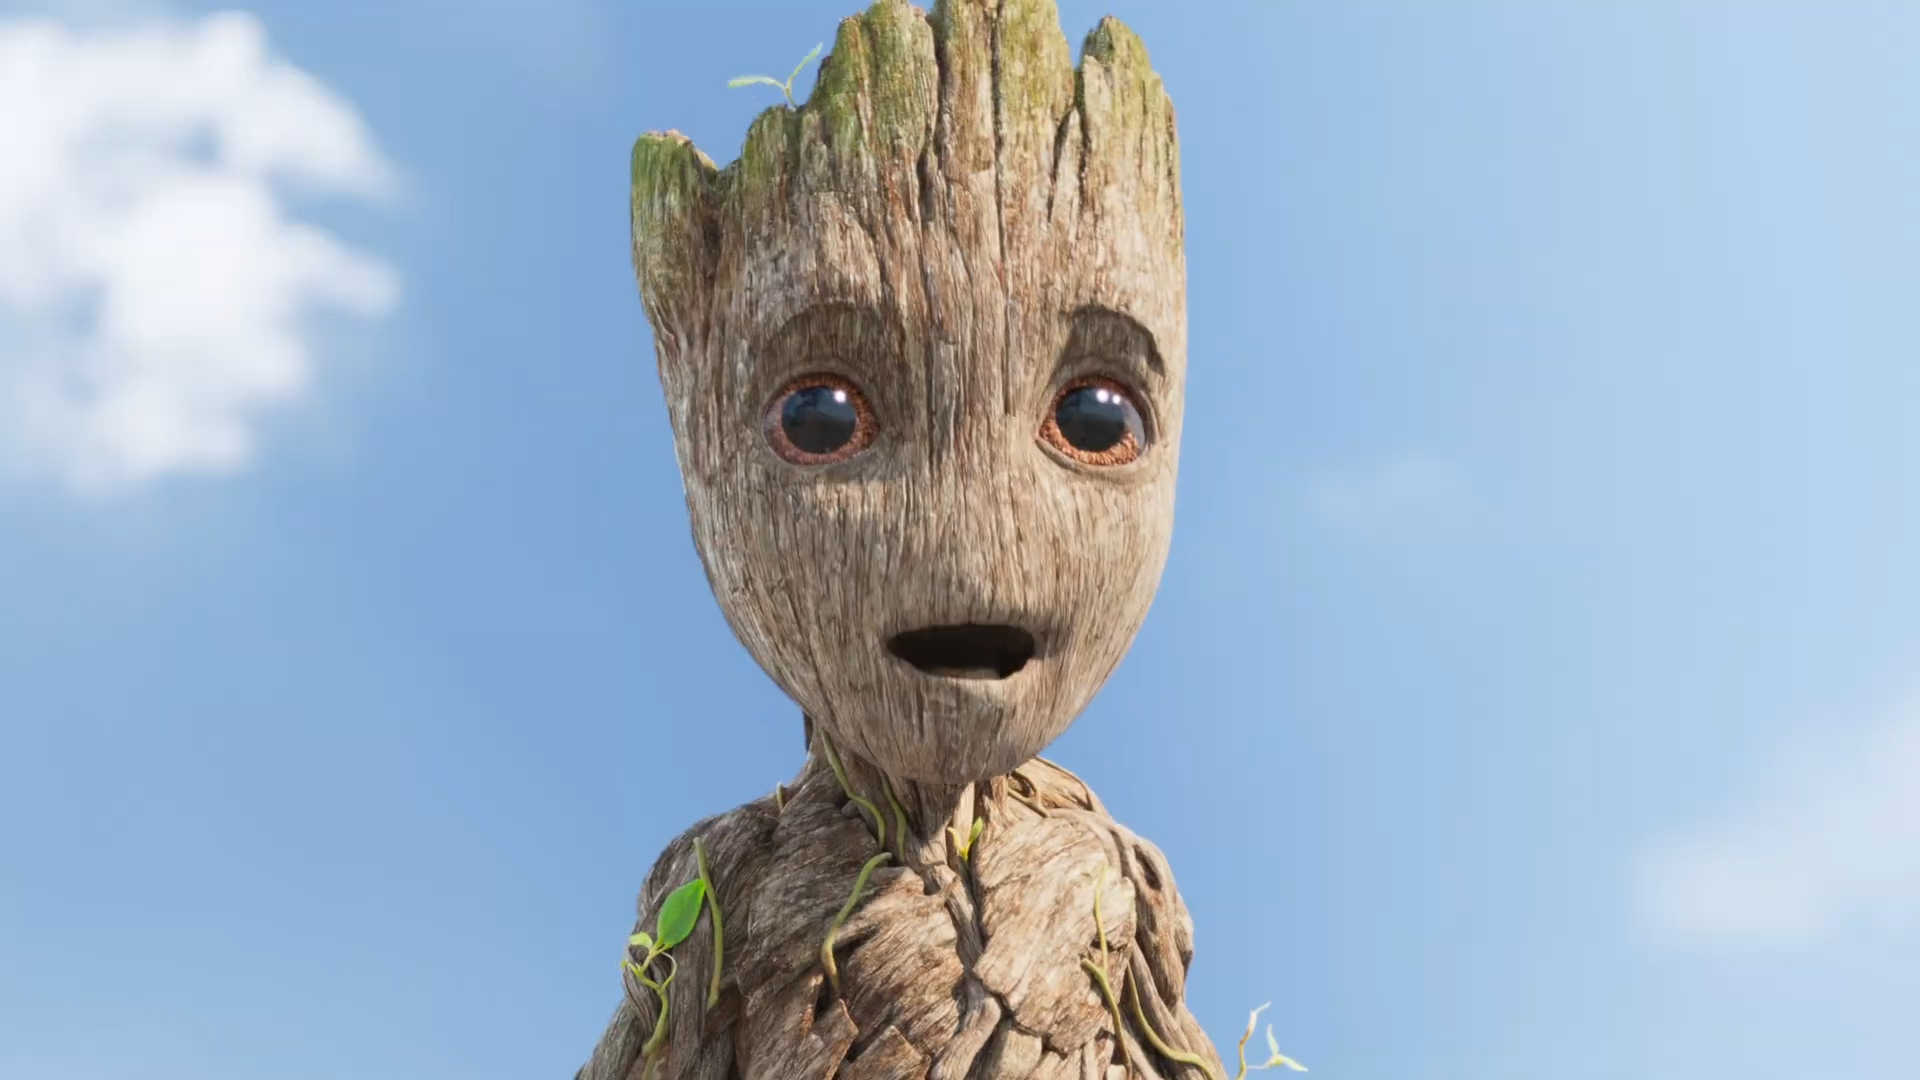 A still of the beloved treelike Groot